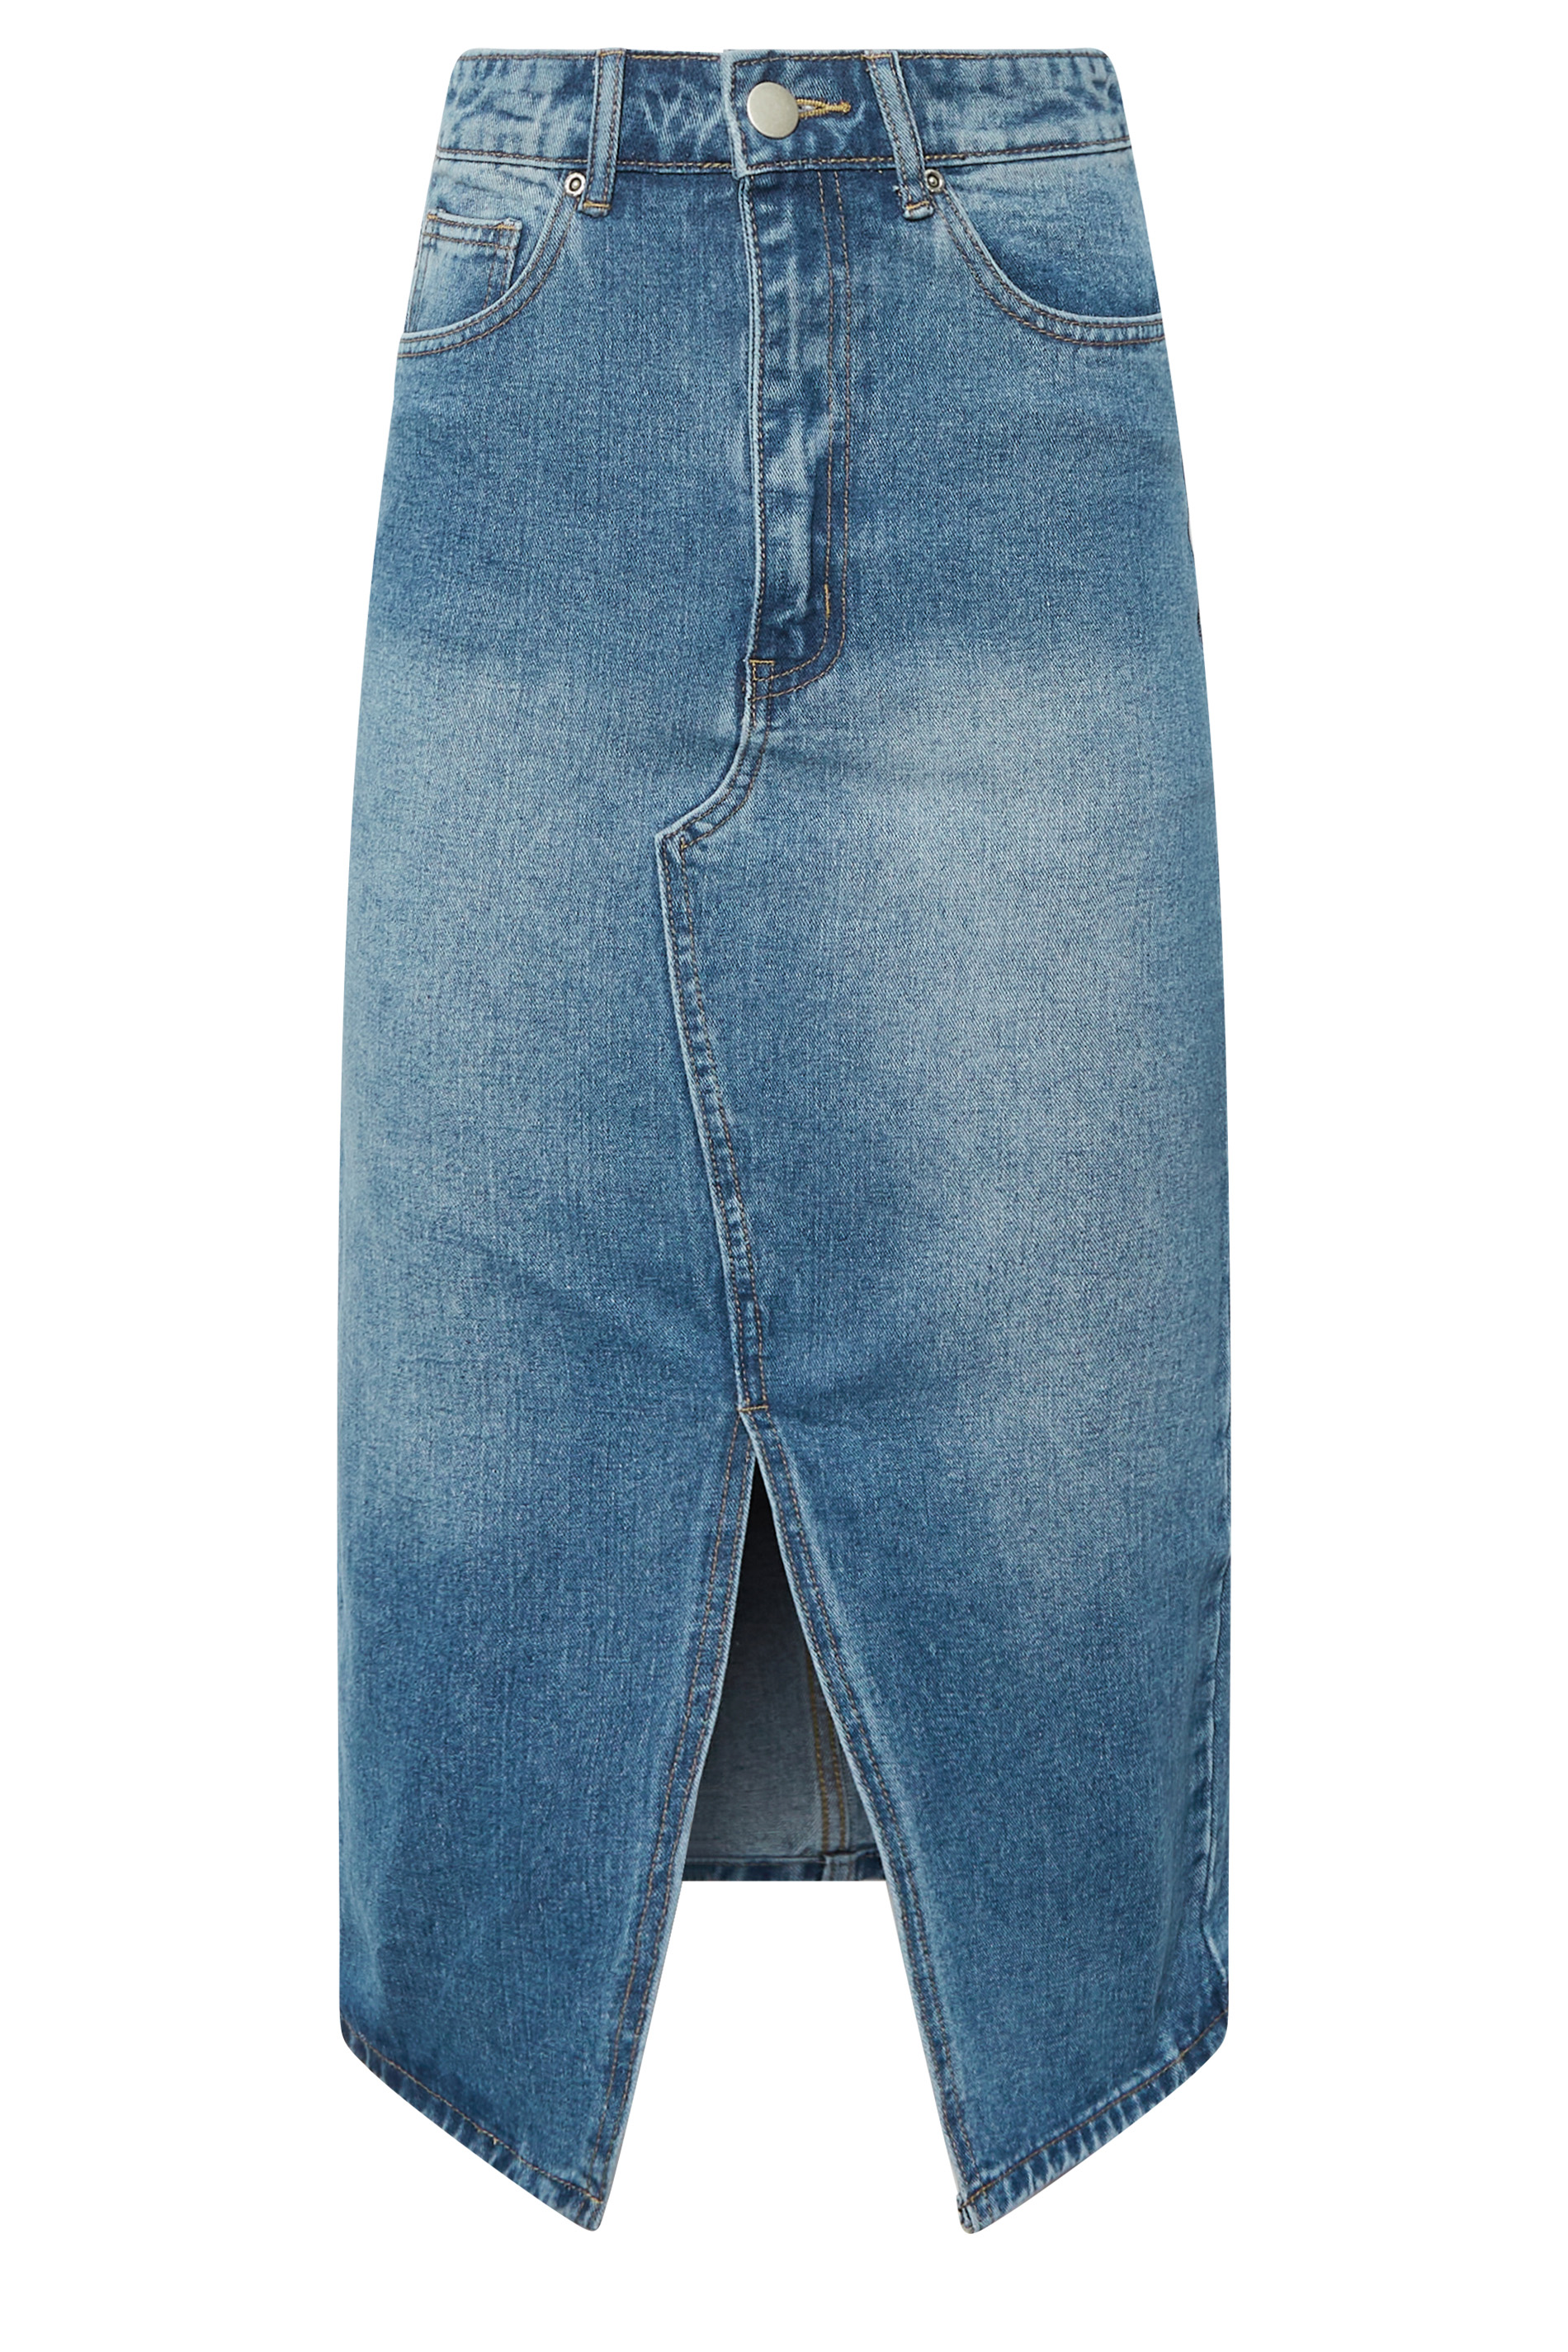 YOURS PETITE Plus Size Curve Blue Denim Midi Skirt | Yours Clothing  1